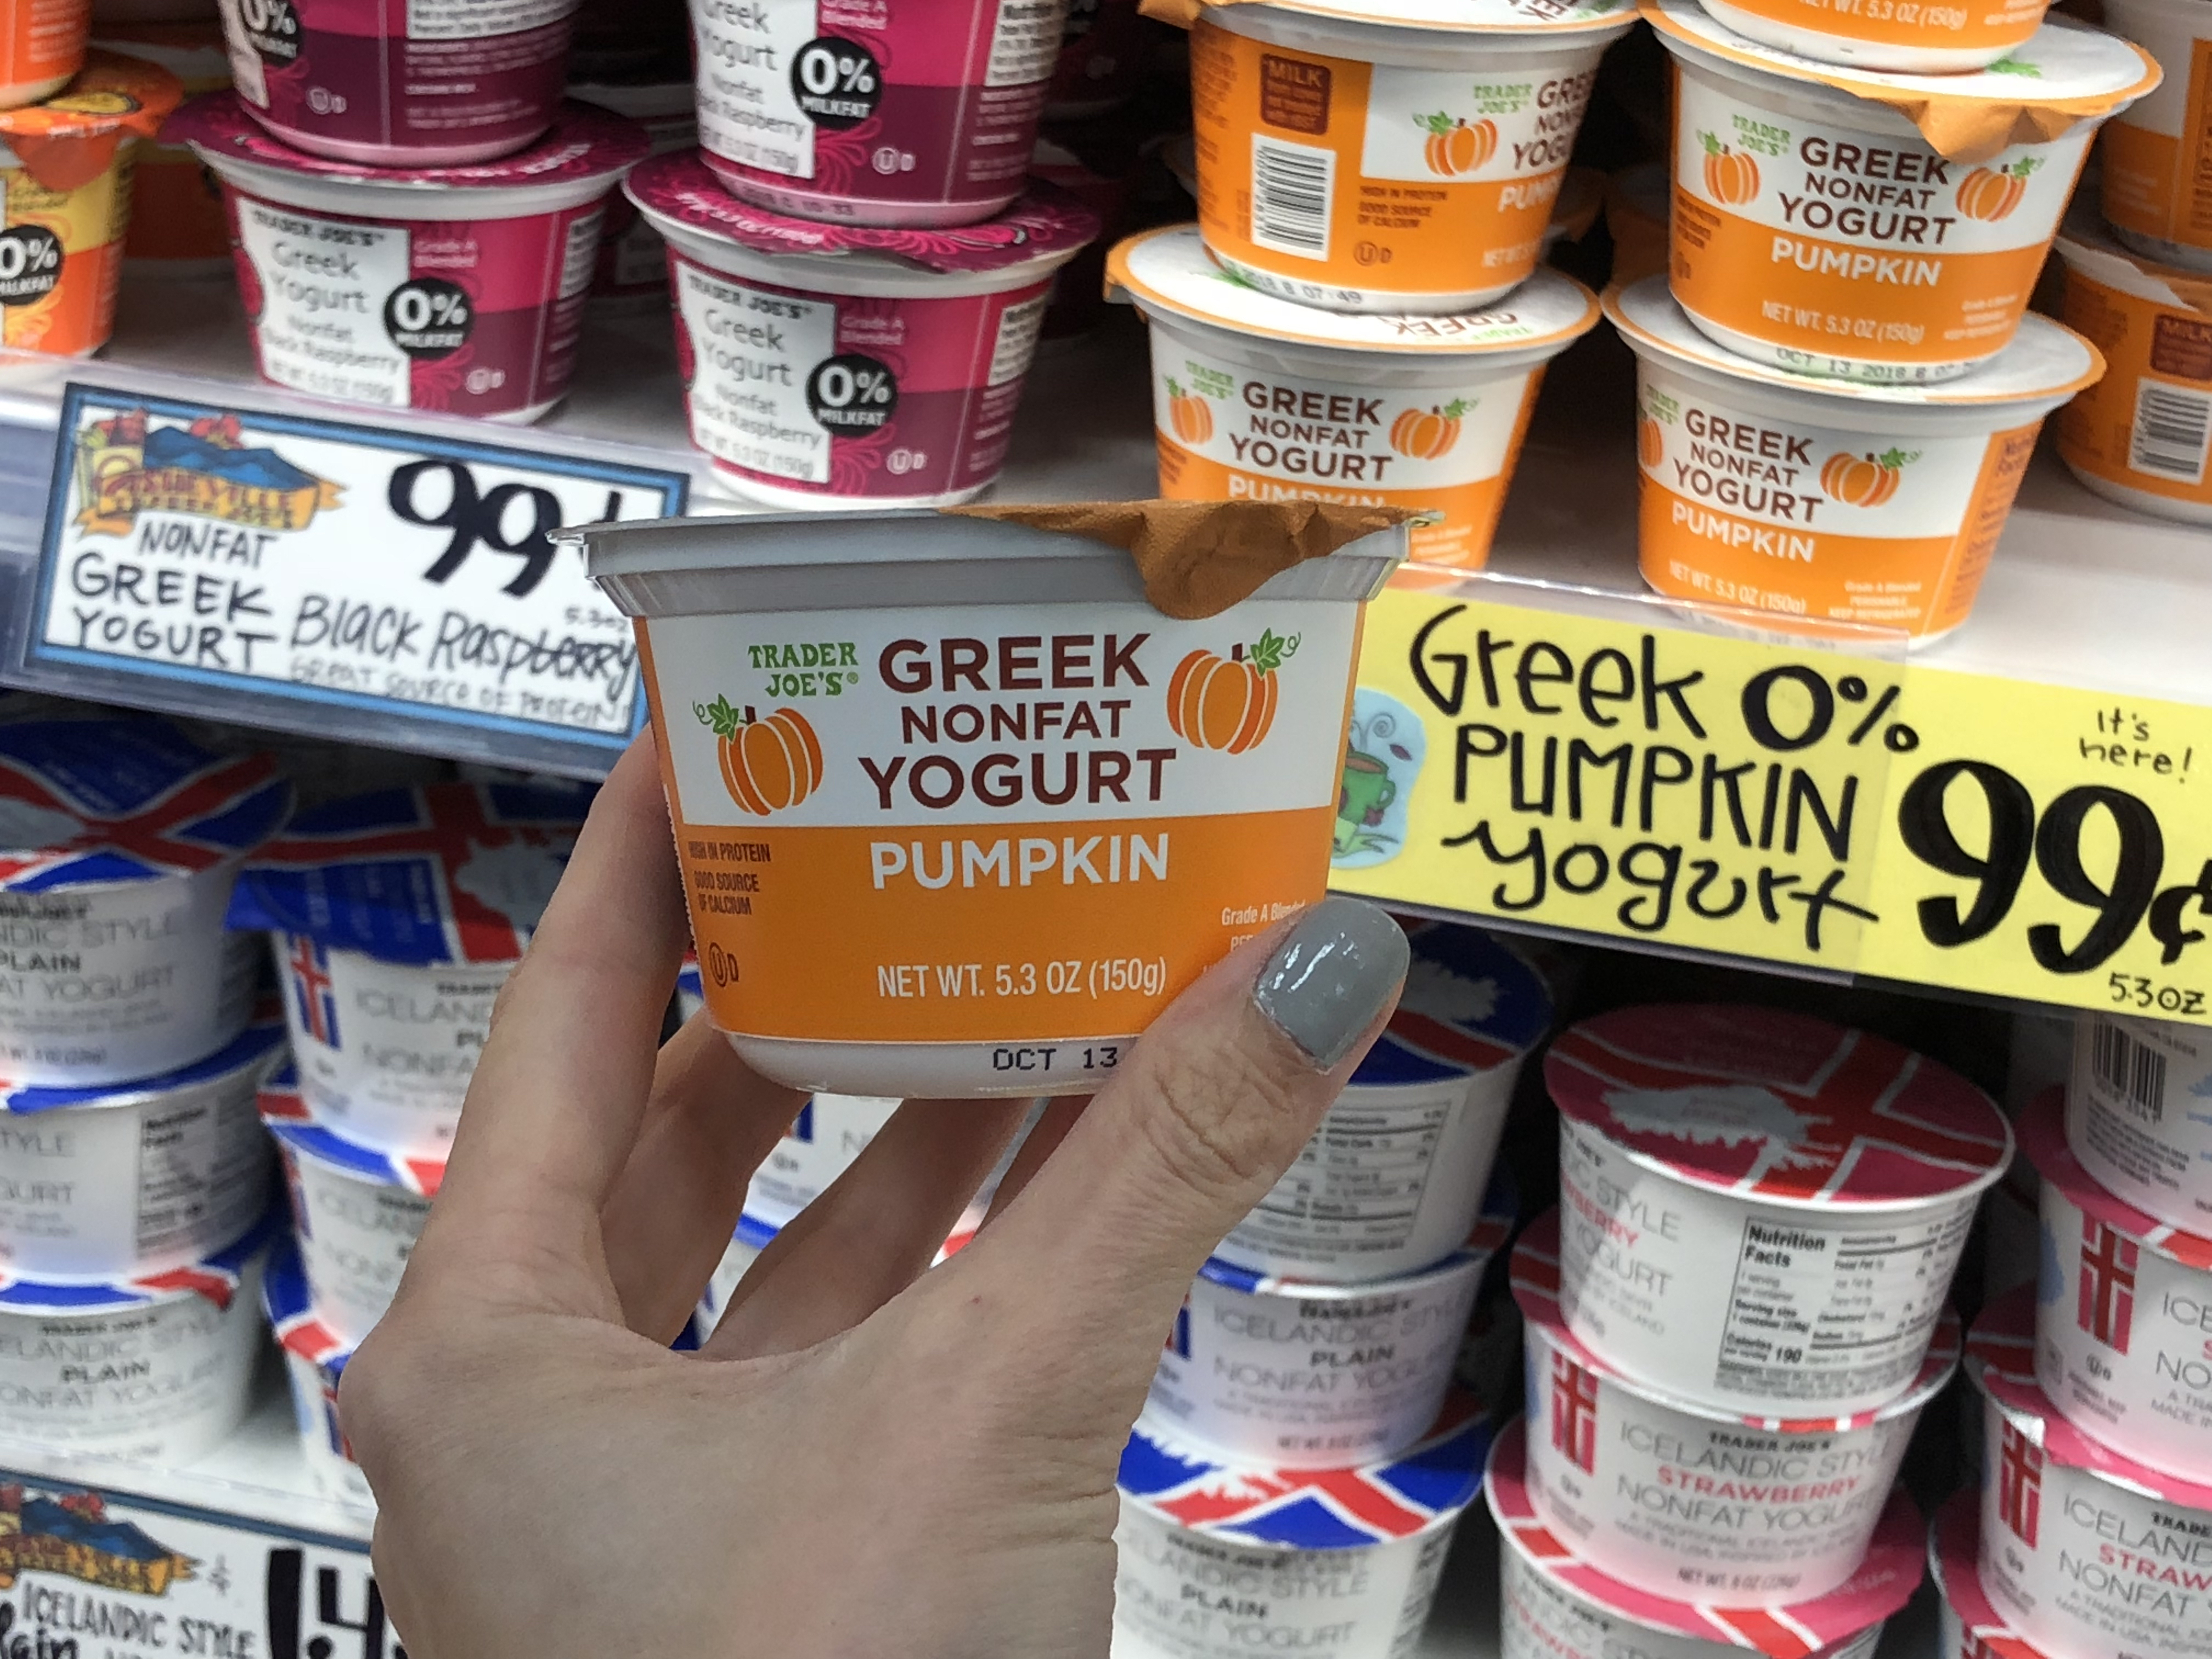 Deals on Trader Joe's Pumpkin items – Pumpkin Greek yogurt Trader Joe's